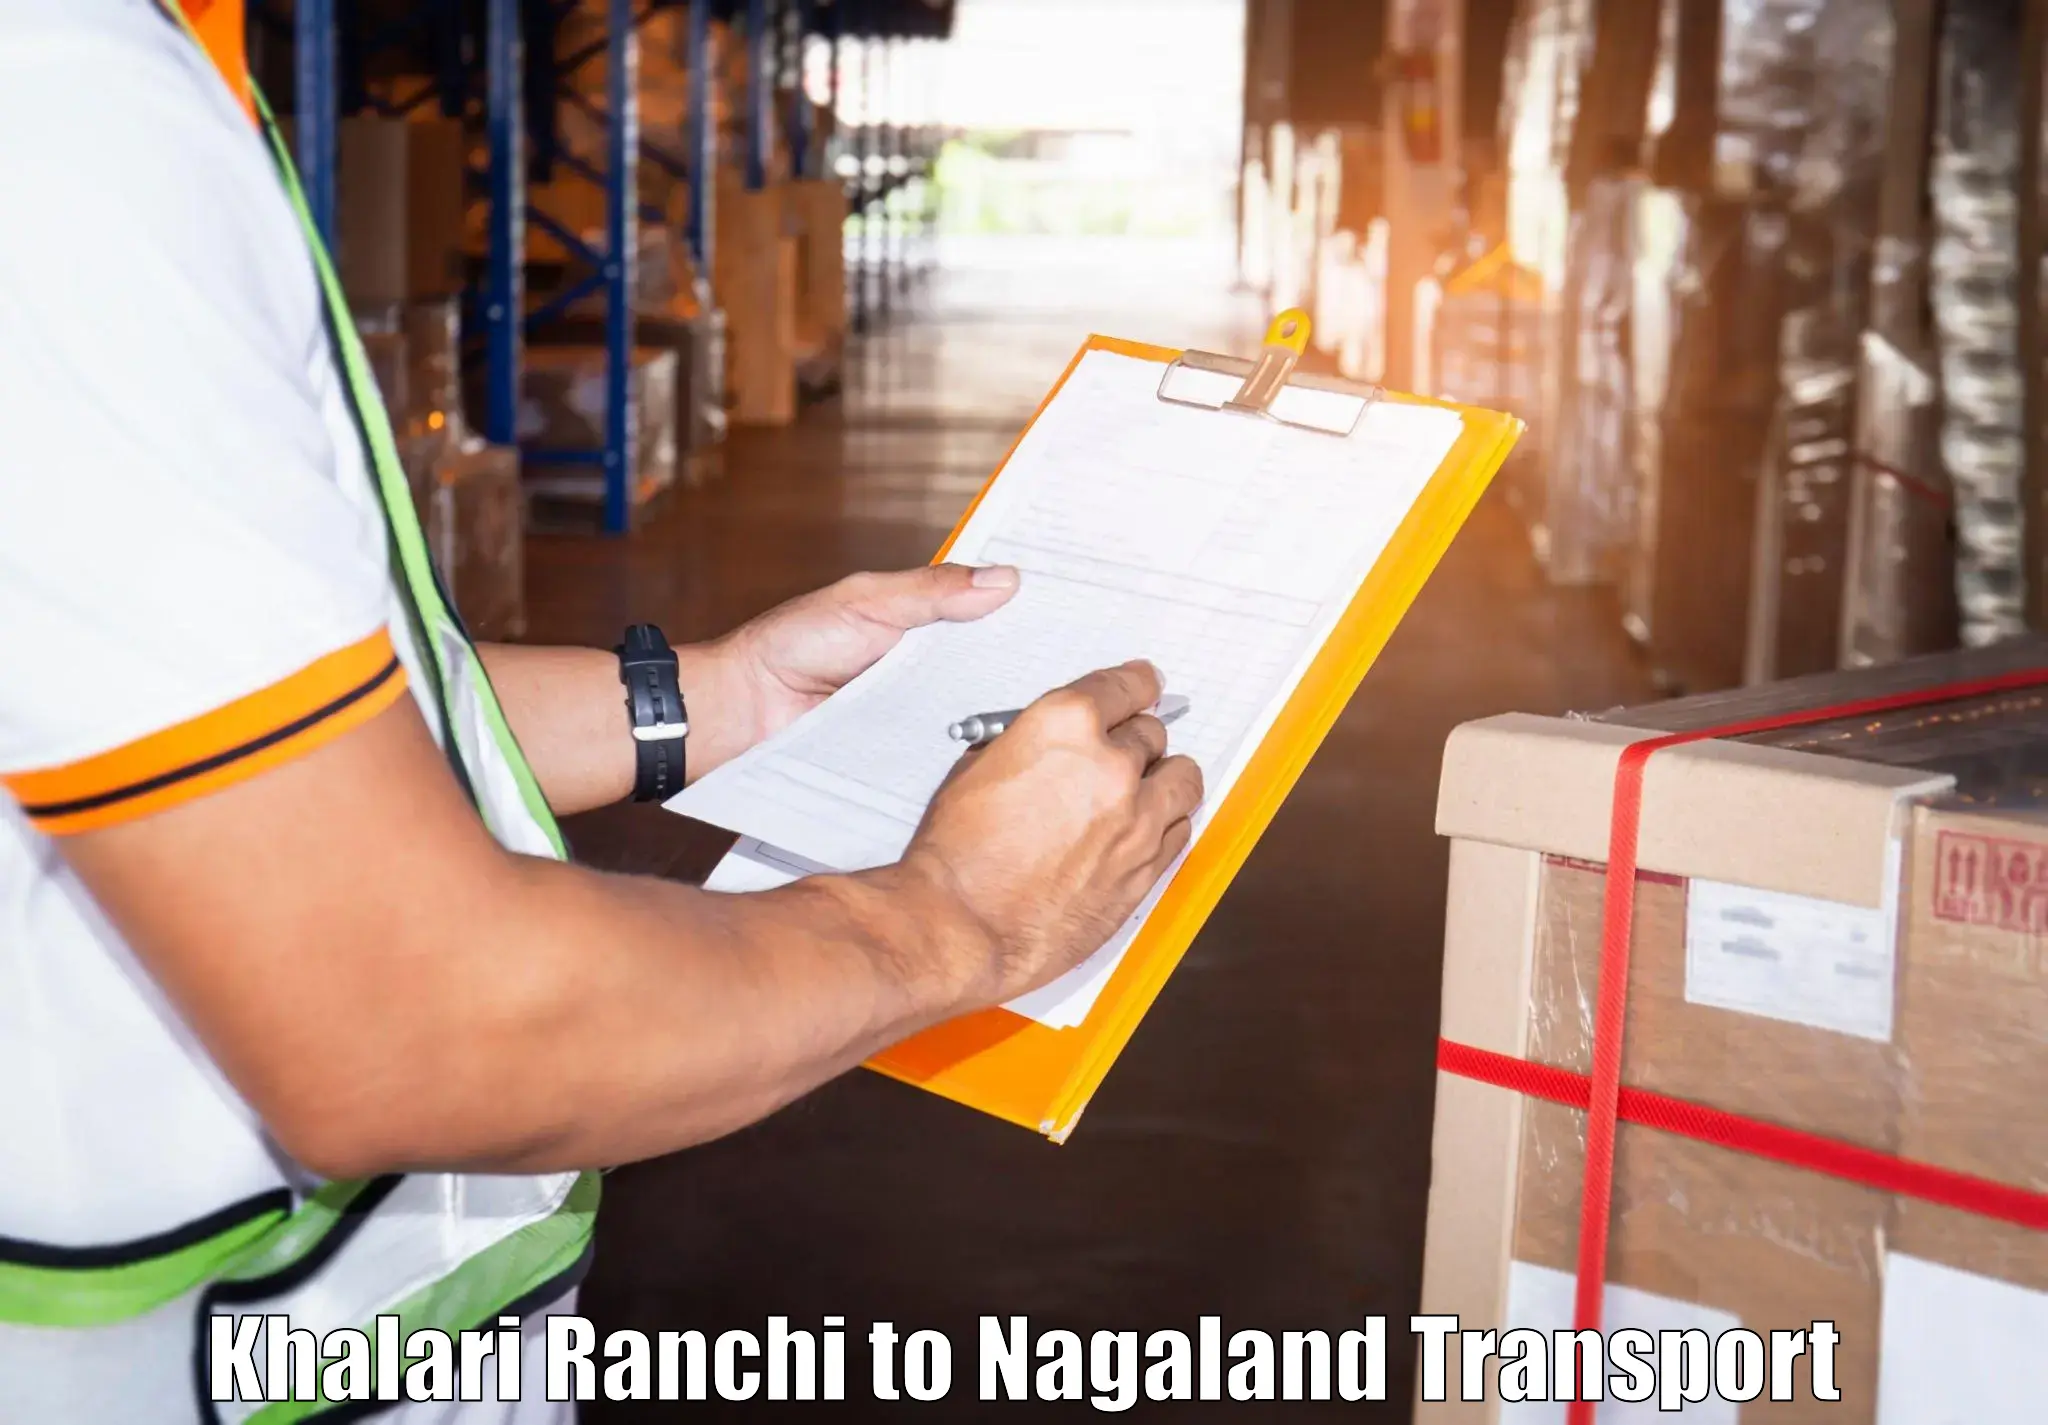 Container transport service Khalari Ranchi to Kohima